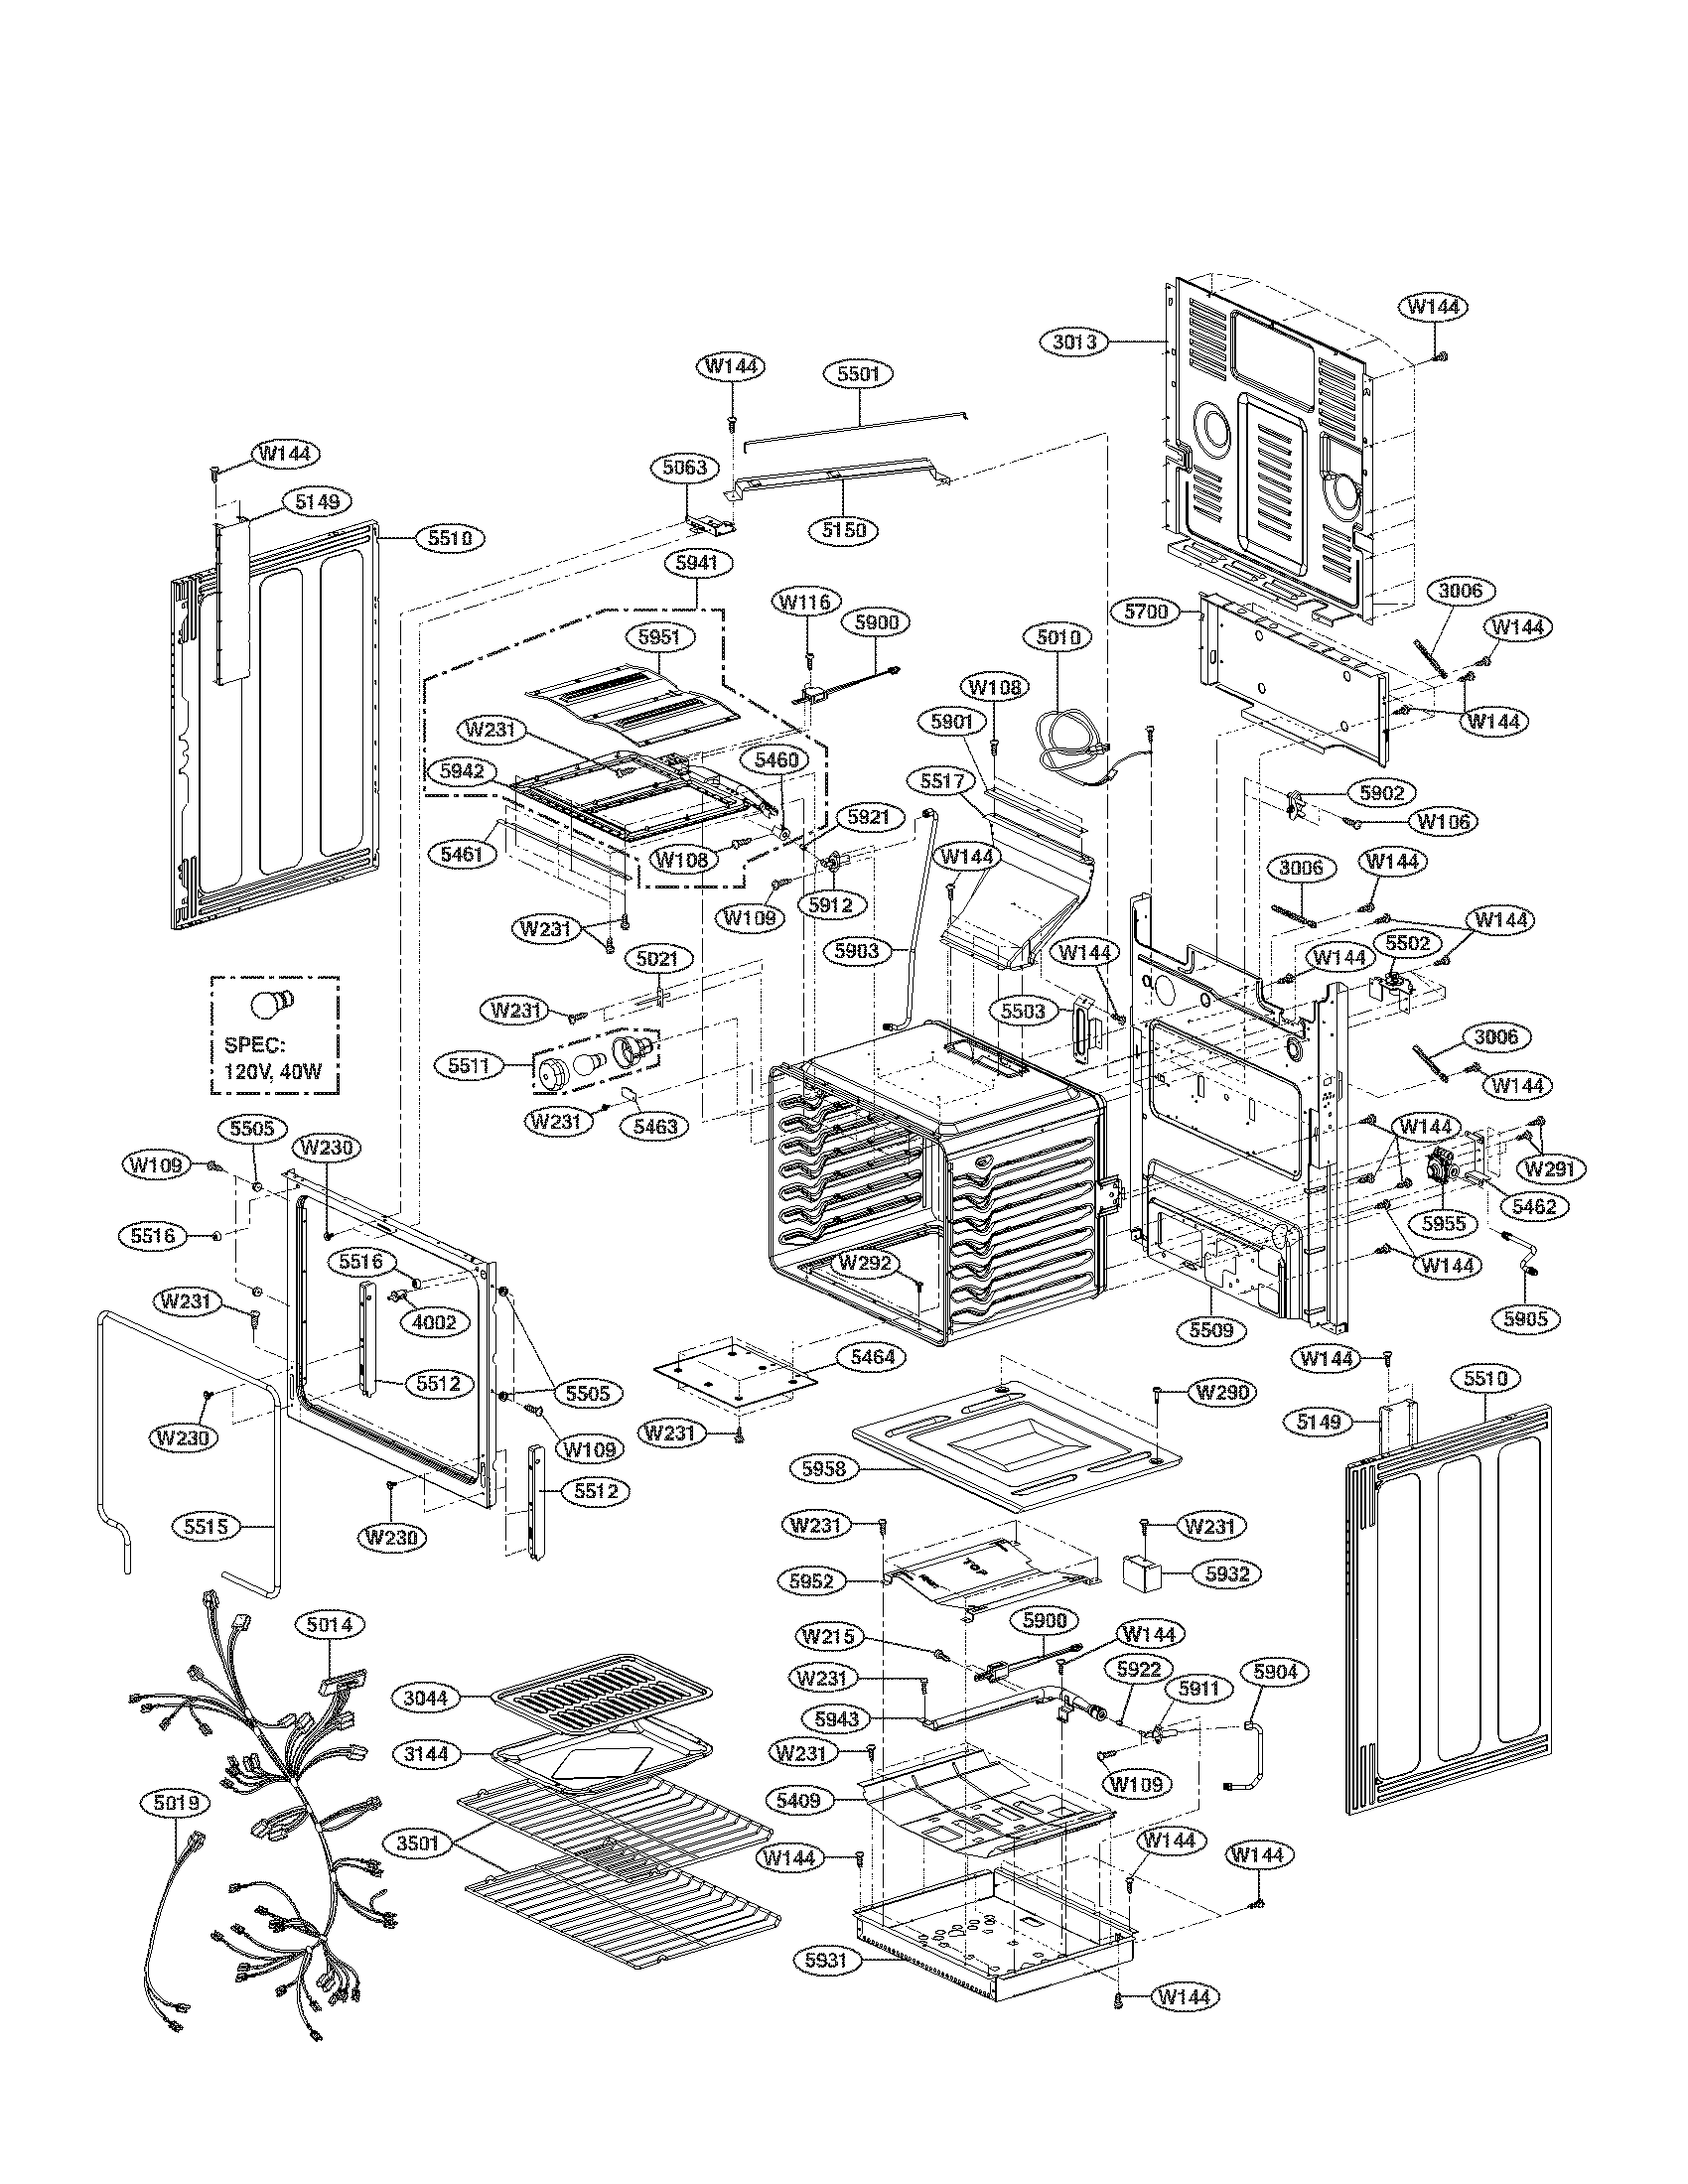 5409 Parts Manual